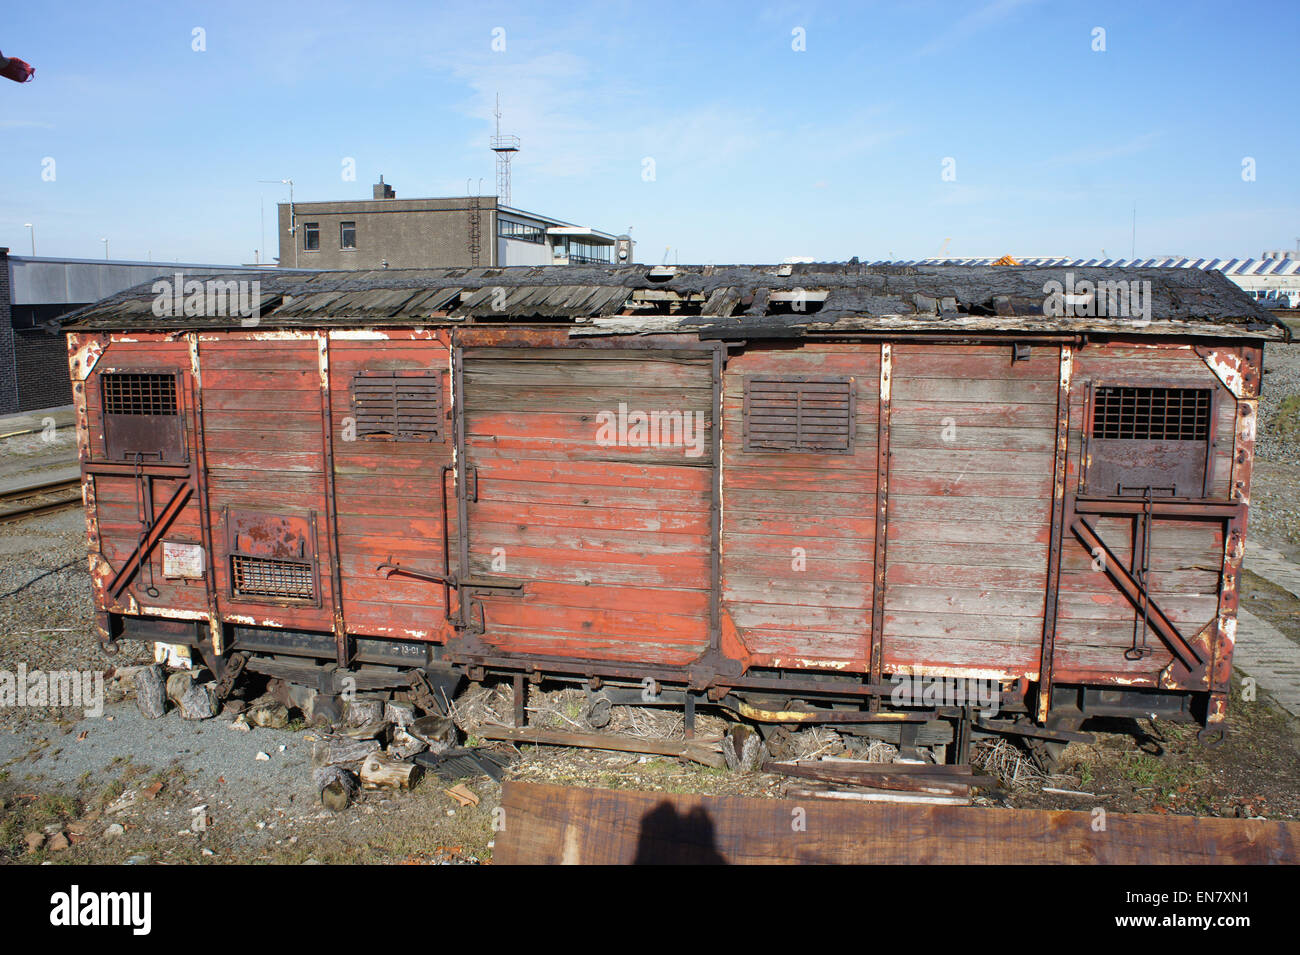 Railroad wagon -Fotos und -Bildmaterial in hoher Auflösung – Alamy